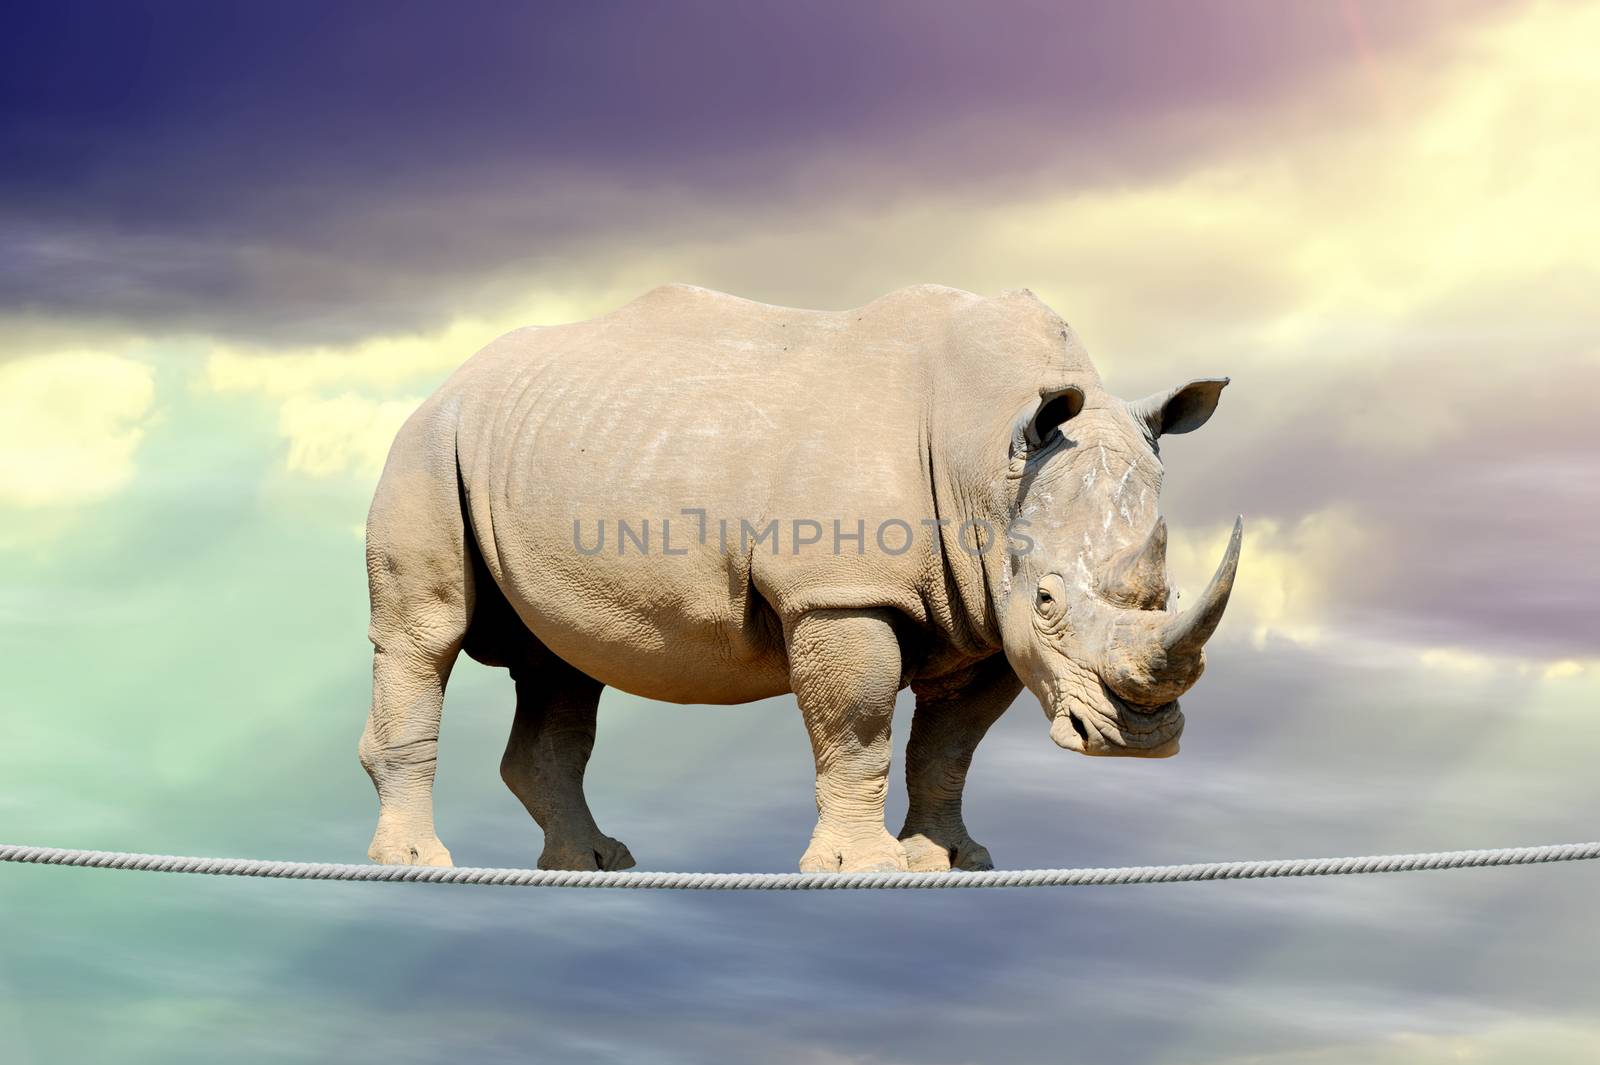 Rhino in sky walking on rope